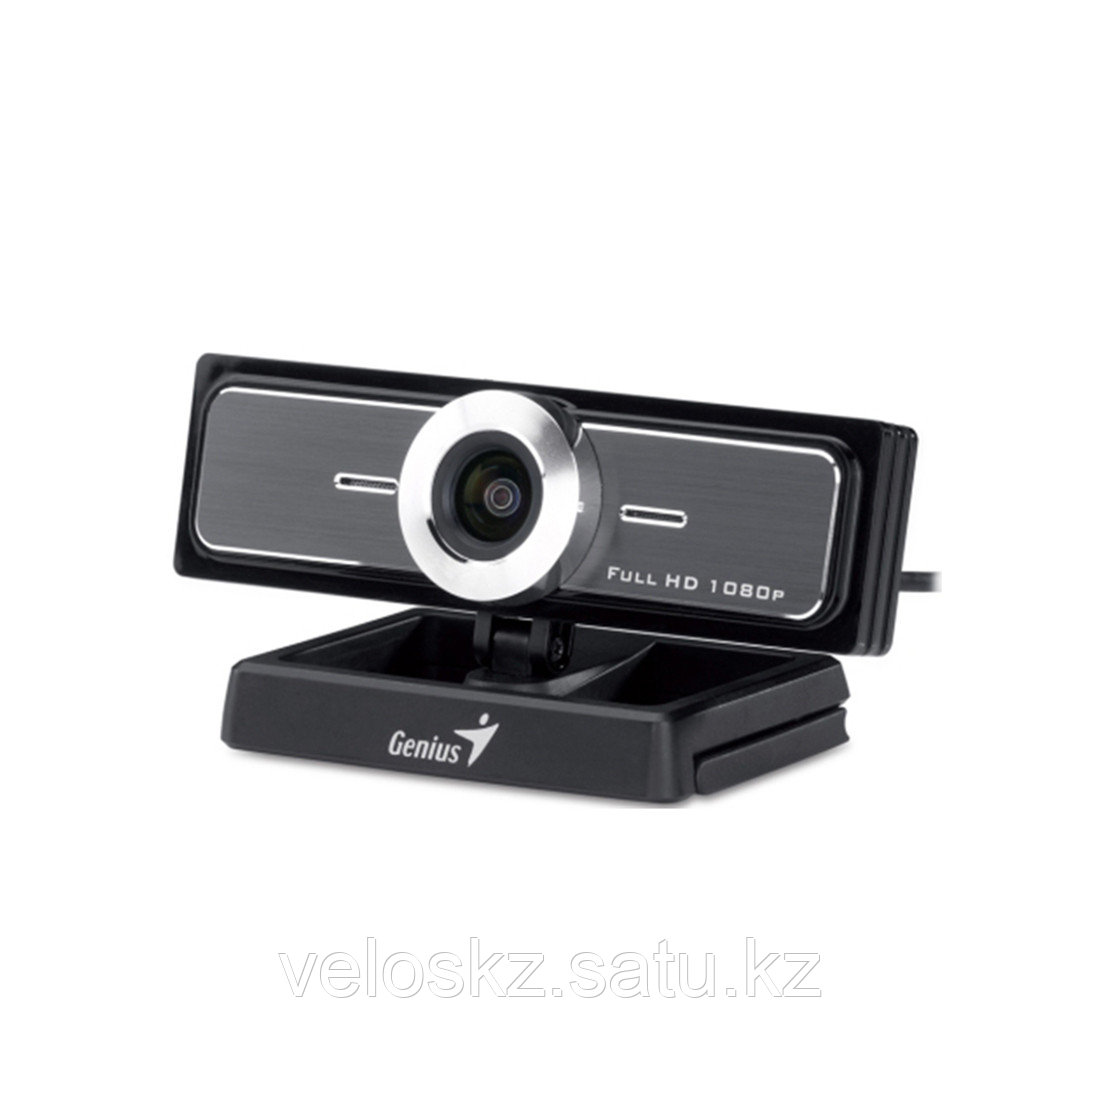 Genius Веб камера Genius WideCam F100, USB 2.0, 2.0Mpx